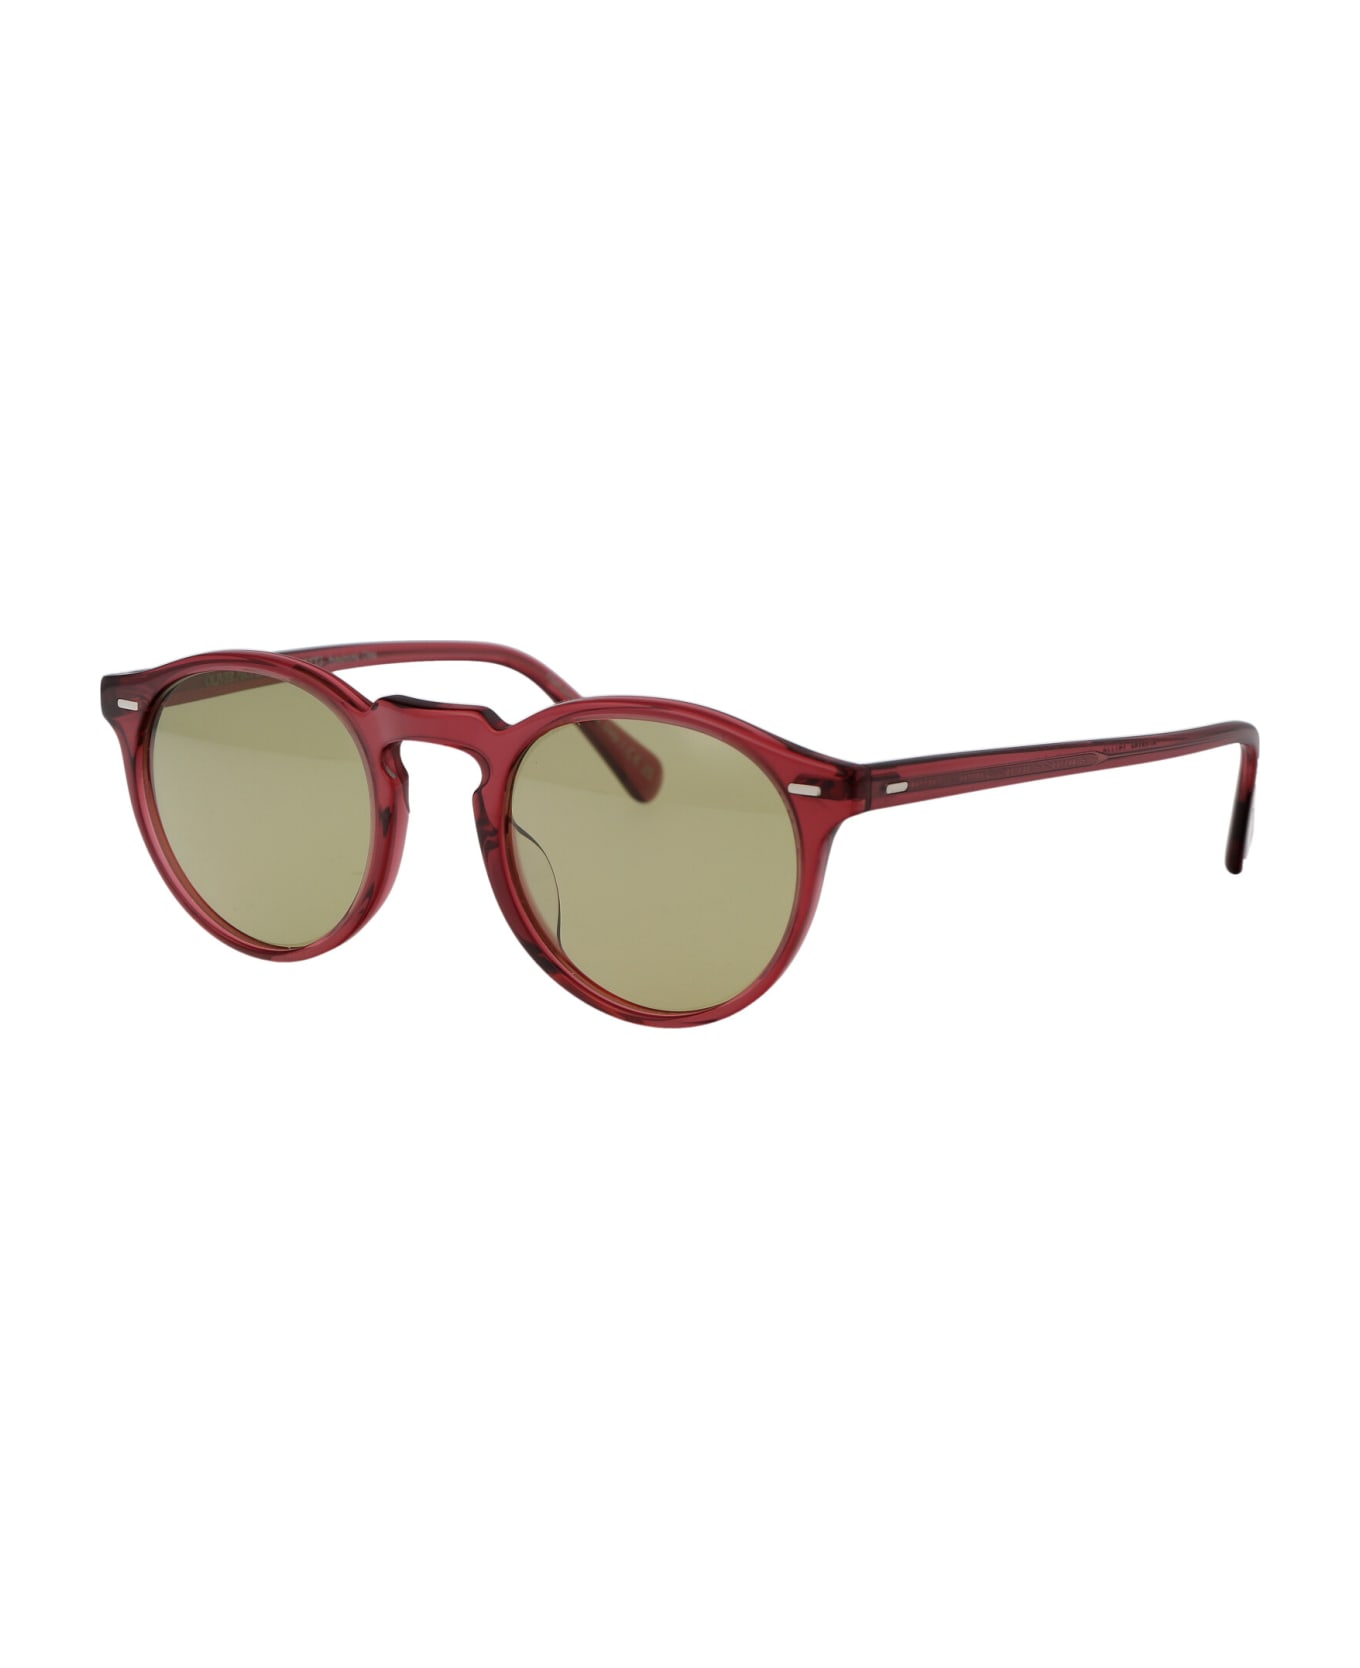 Oliver Peoples Gregory Peck Sun Sunglasses - 17644C Translucent Rust